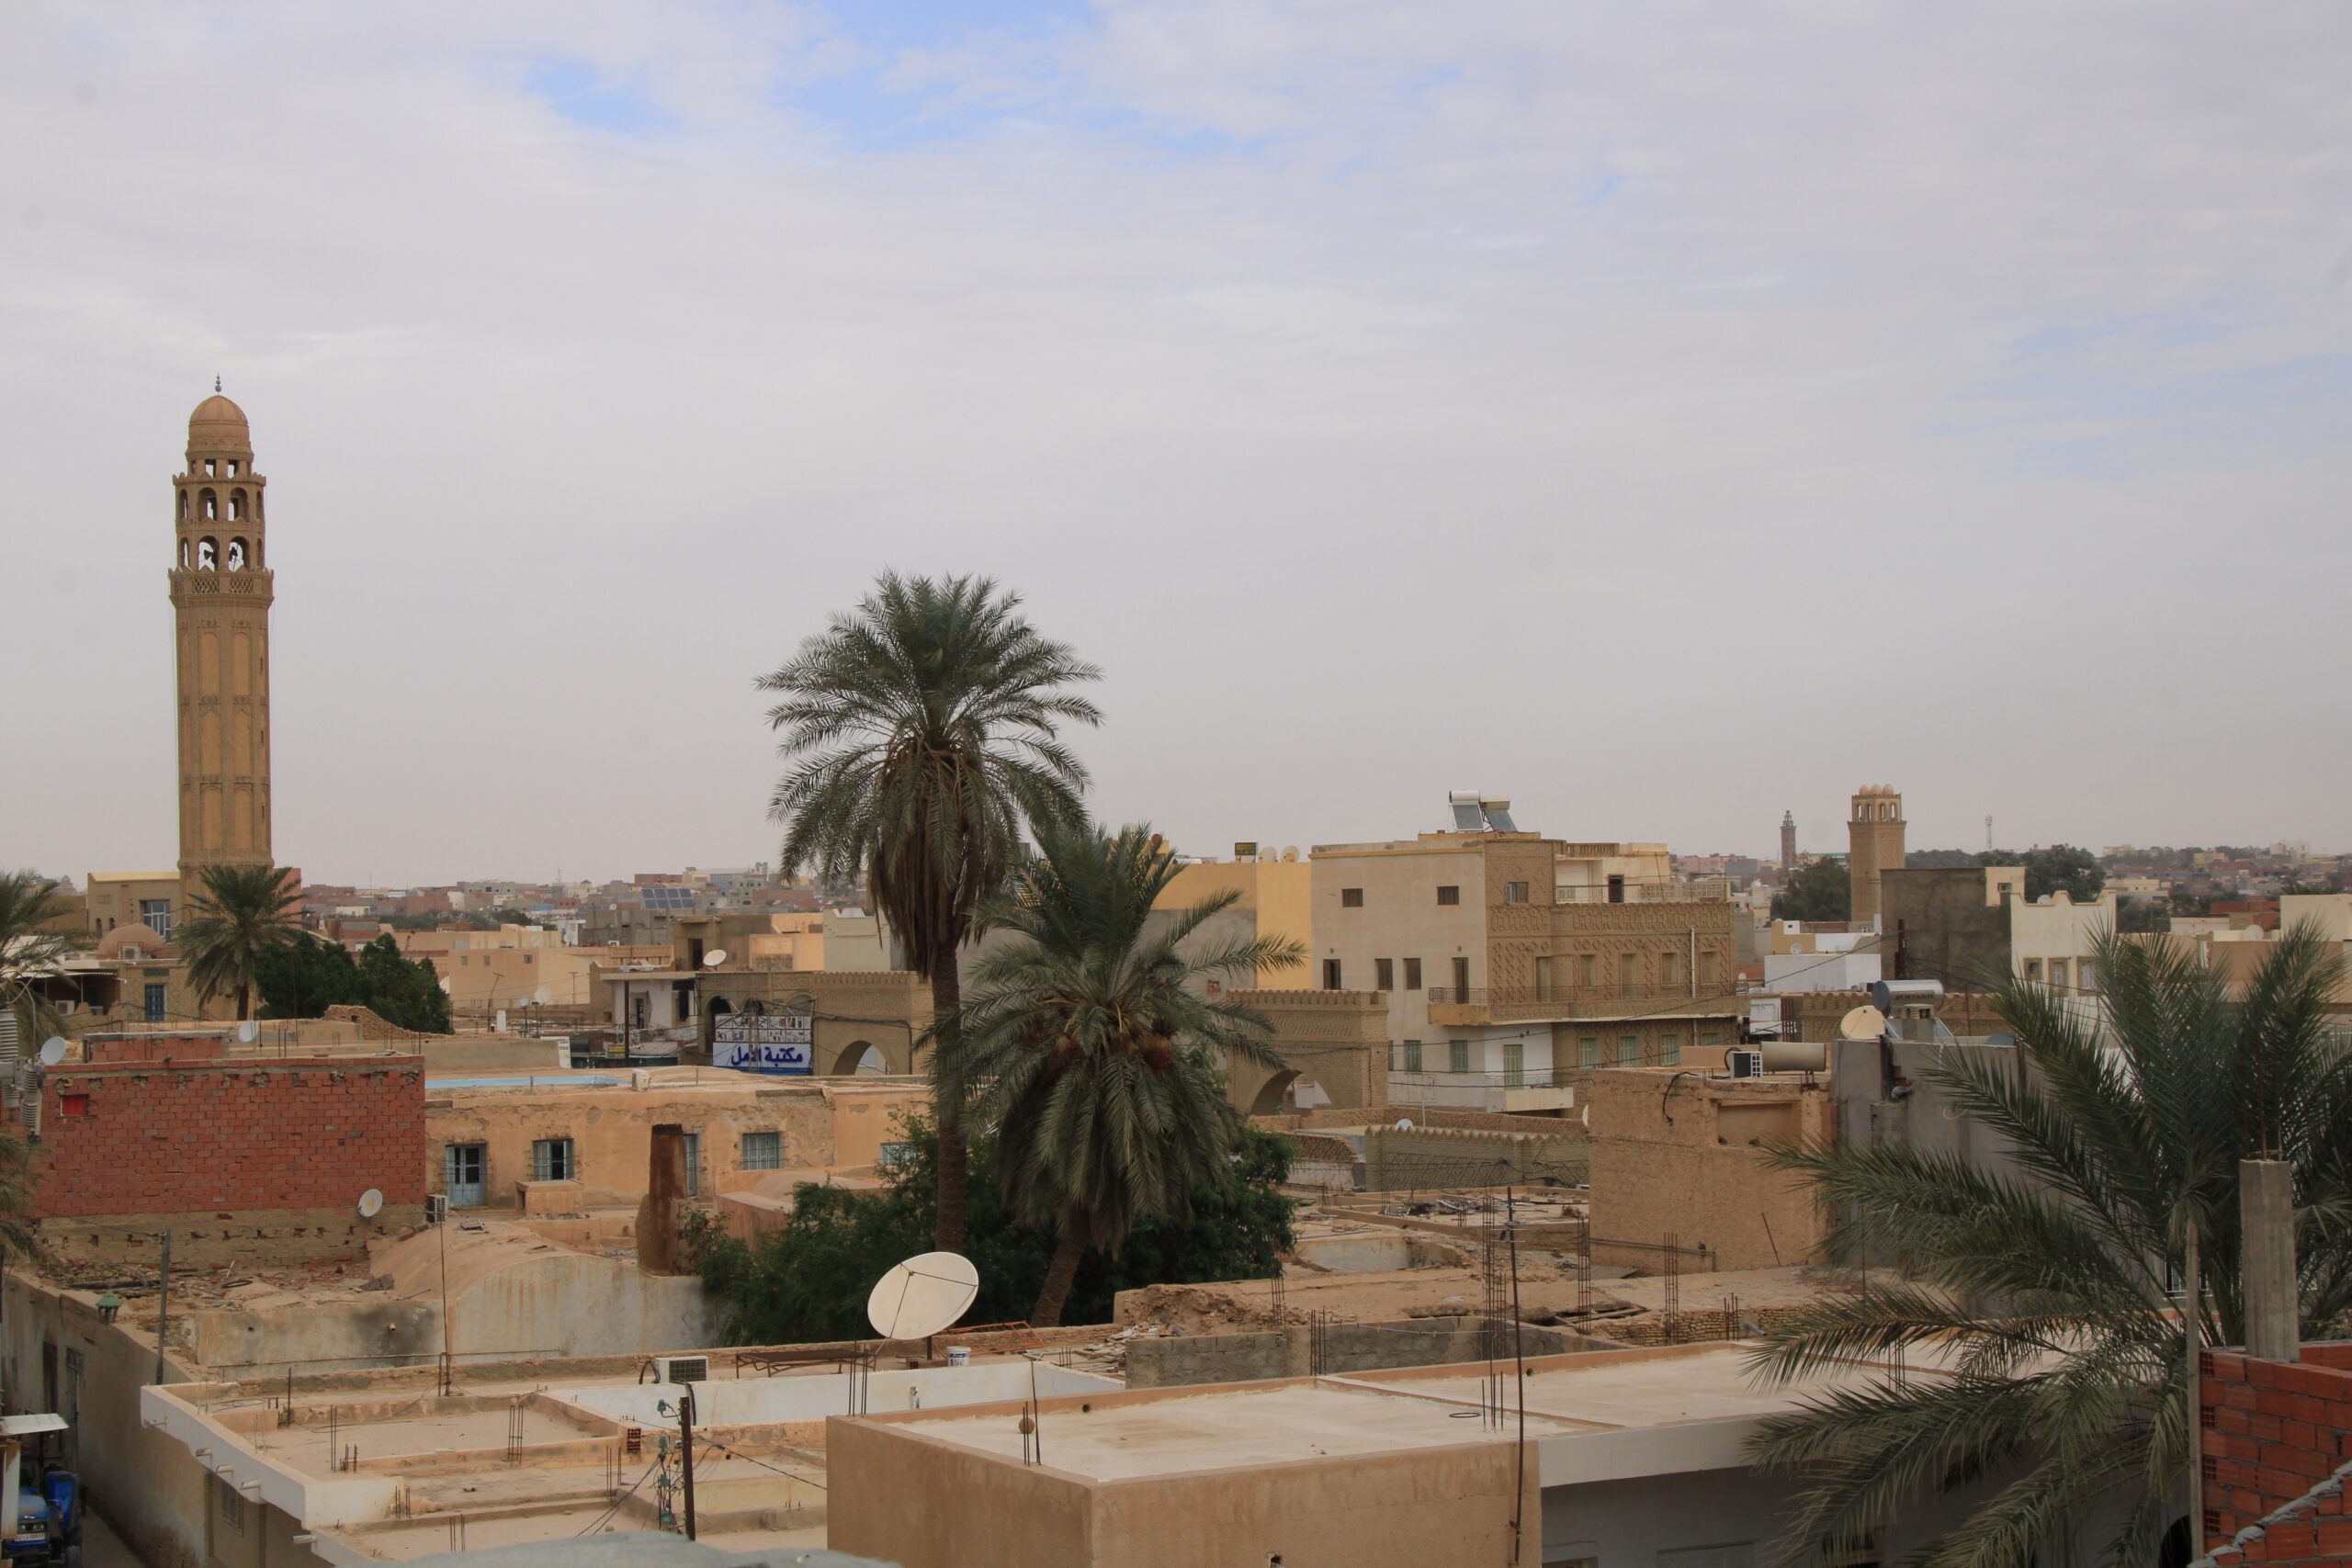 Date Palms Built the Modern Adventure Captial of the Tunisian Sahara